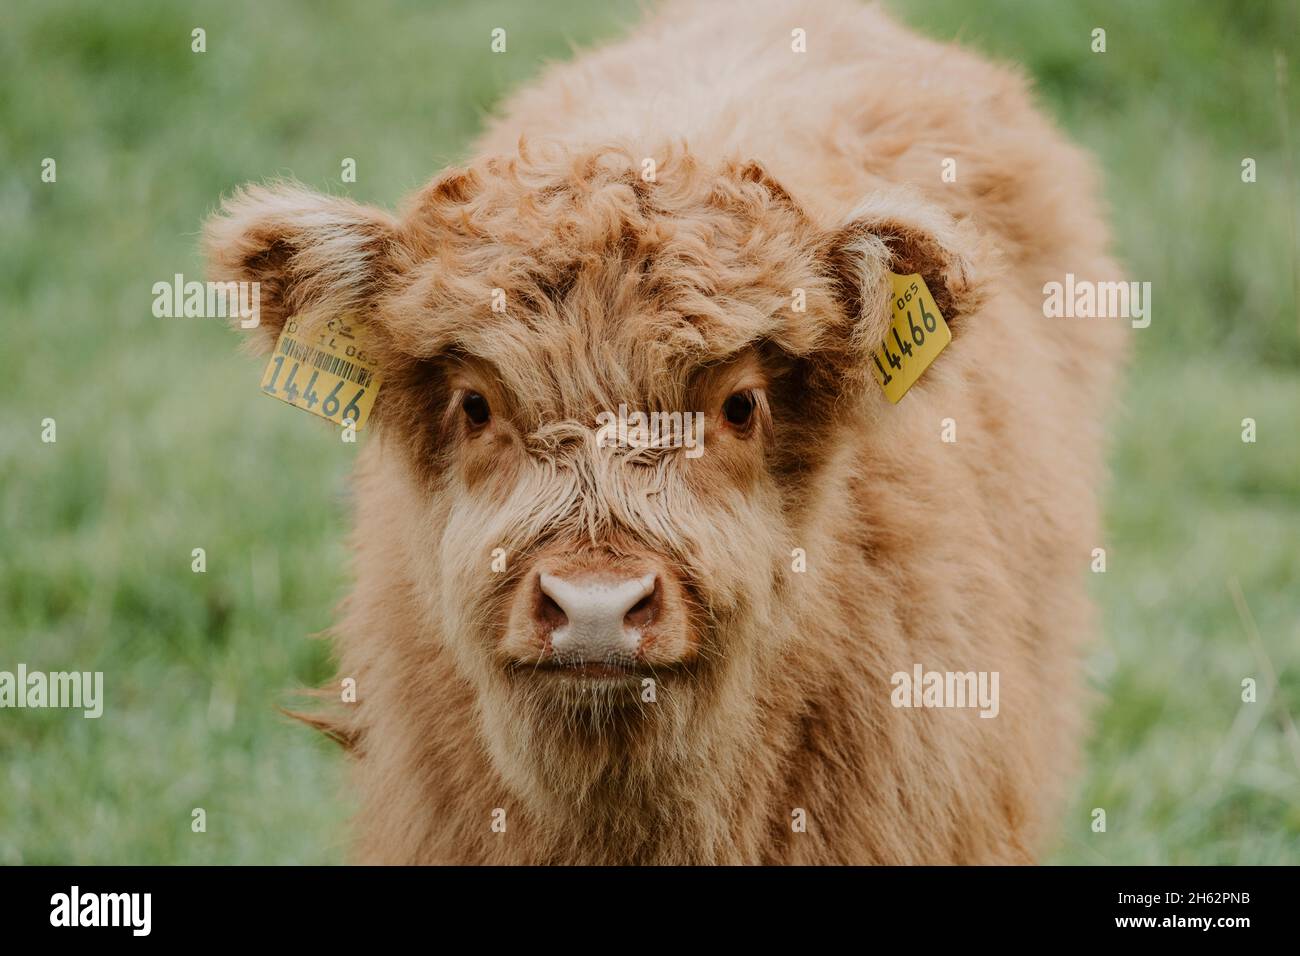 scottish highland cattle,calf,leipzig,saxony,germany,spring Stock Photo